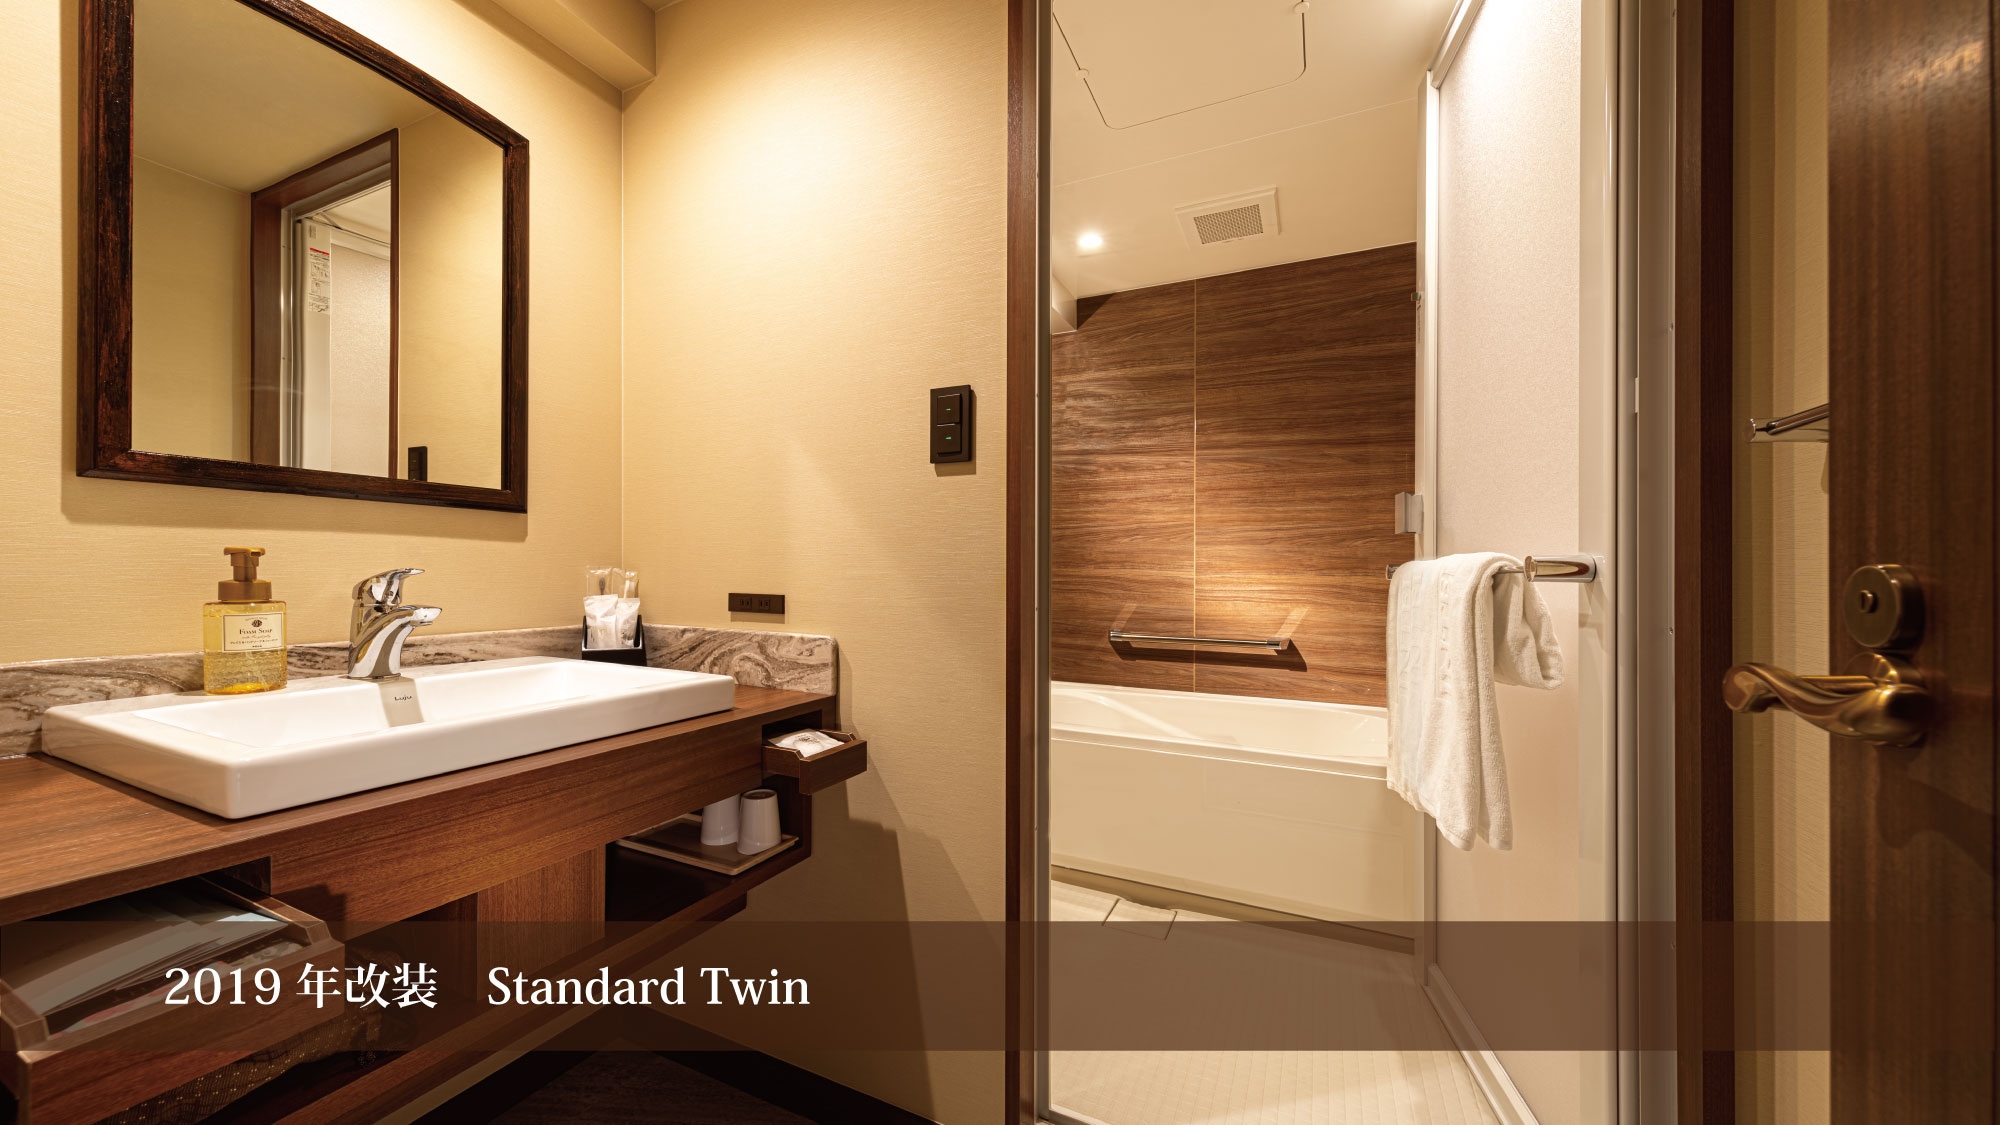 2019 Renovated Standard Twin Bathroom